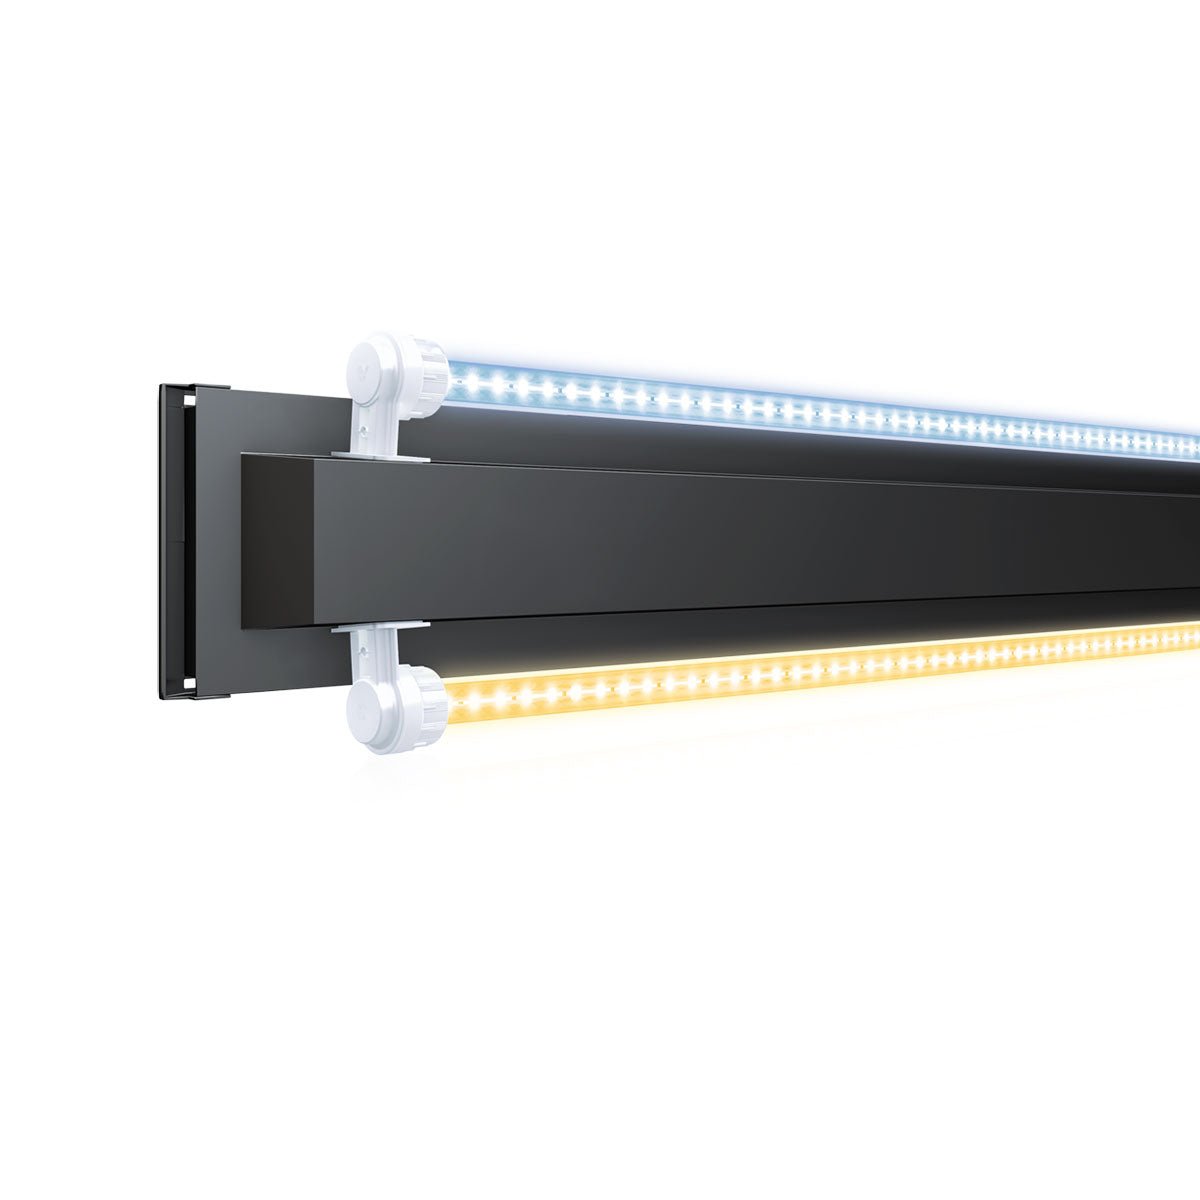 Juwel MultiLux LED Unit - 120cm - Charterhouse Aquatics